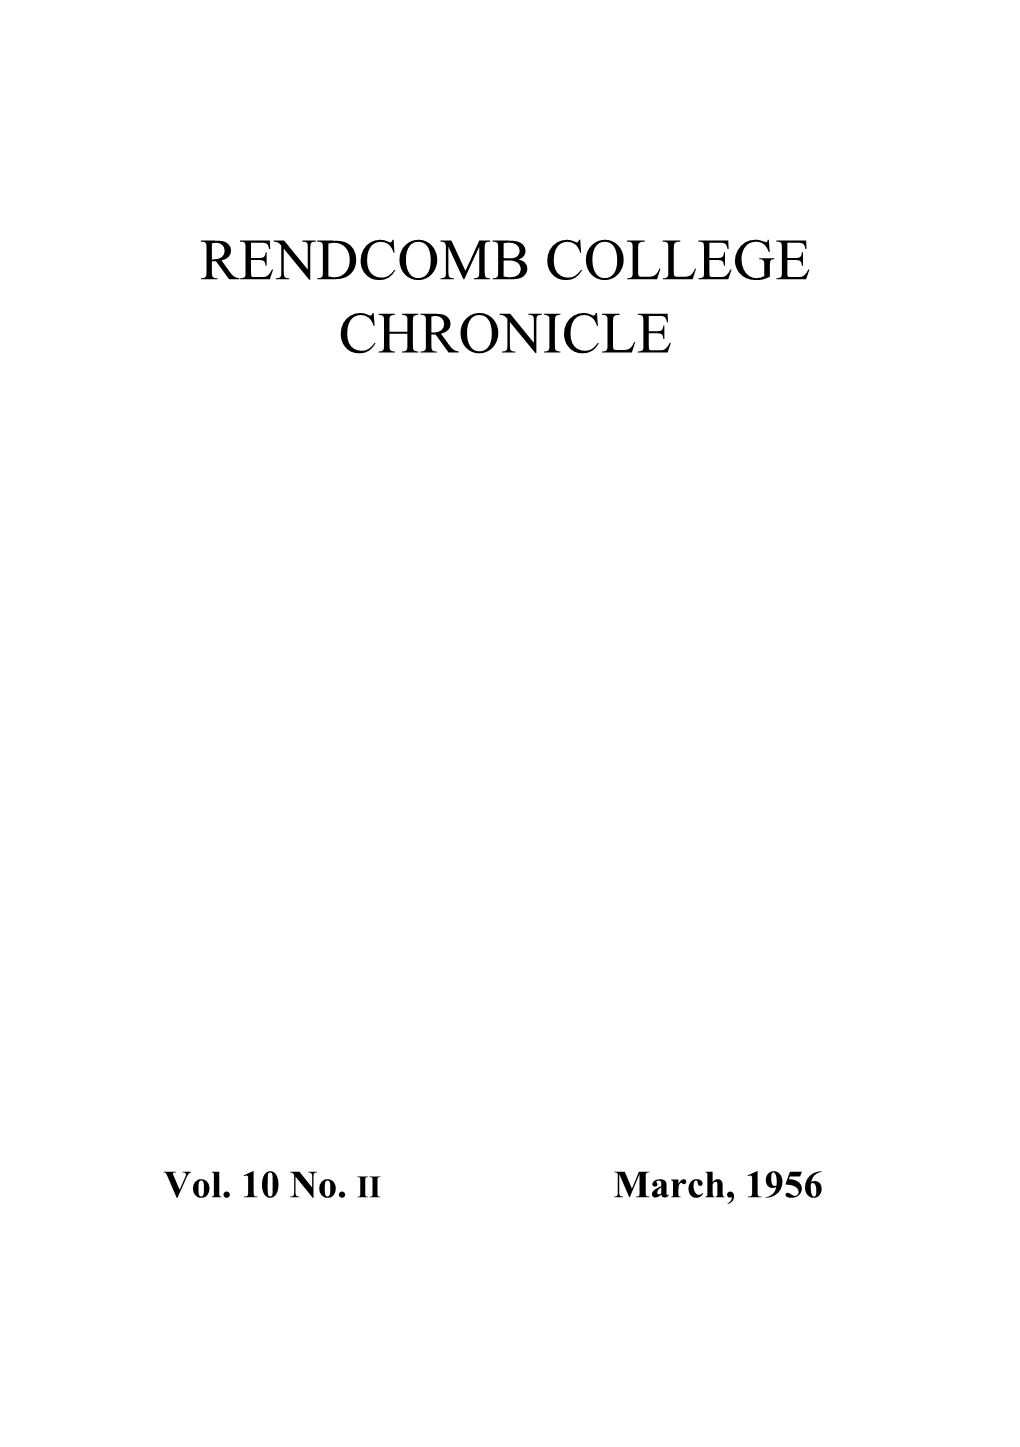 Rendcomb College Magazine Chronicle March 1956